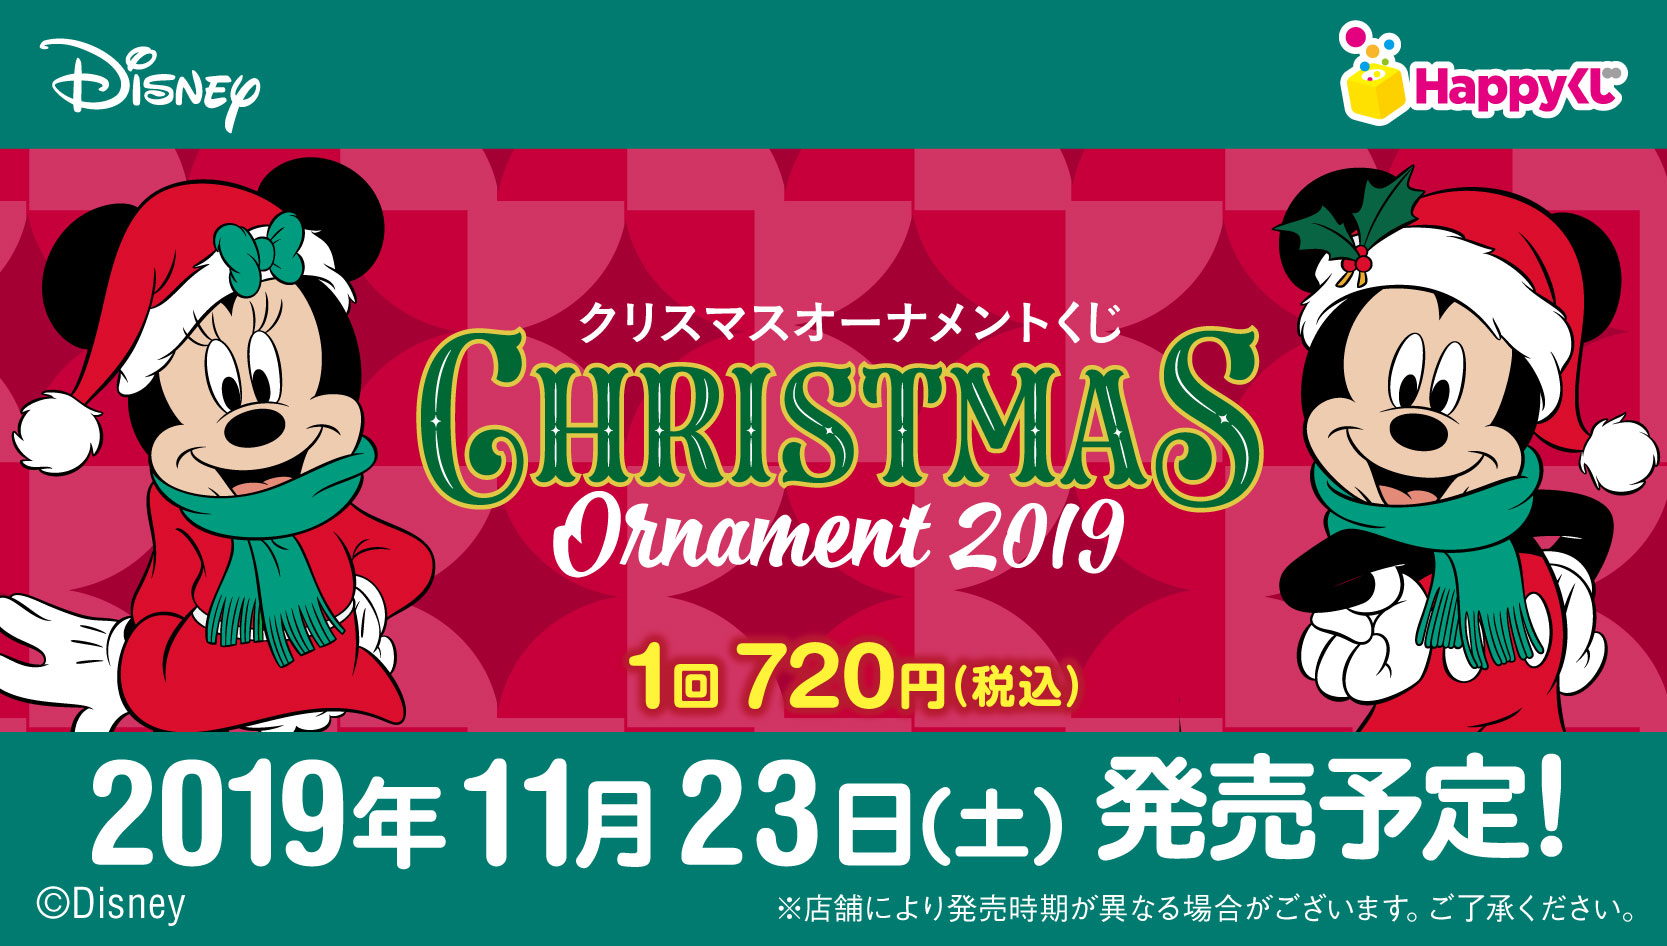 Disney / Christmas Ornament 2019 クリスマスオーナメントくじ